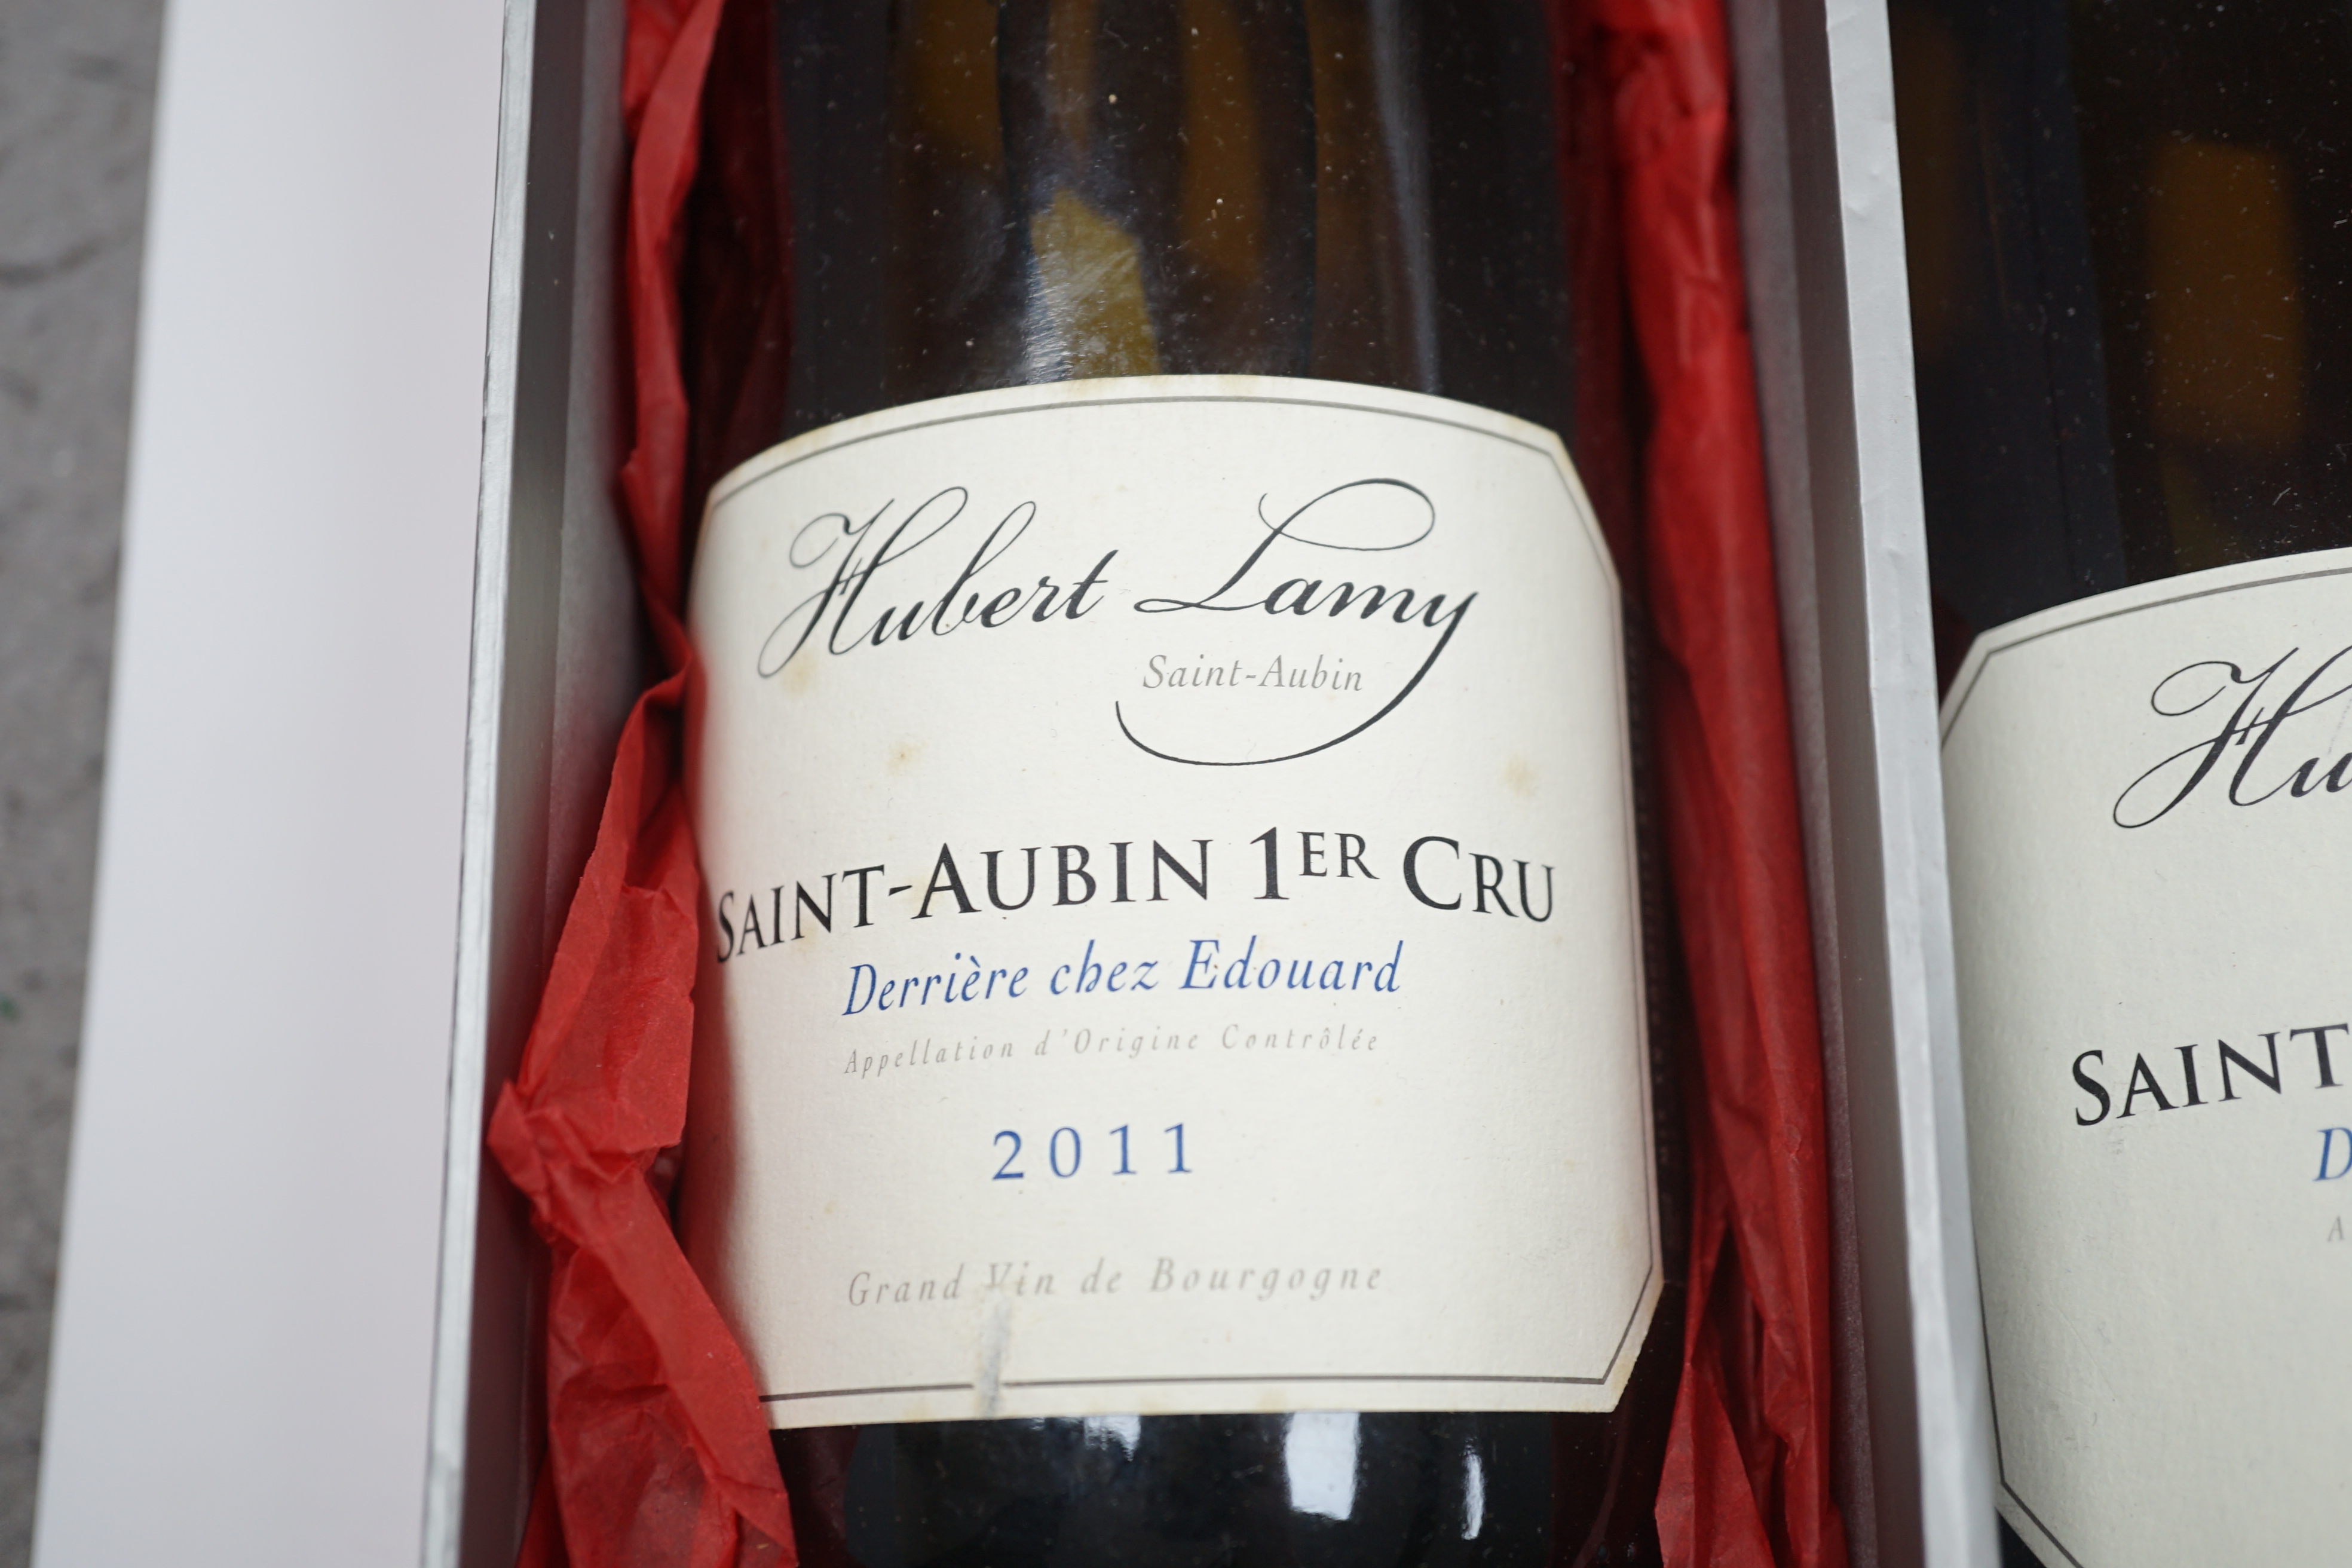 Two bottles of Hubert Lamy Saint-Aubin 1er Cru Derriere chez Edouard 2011 Bourgogne